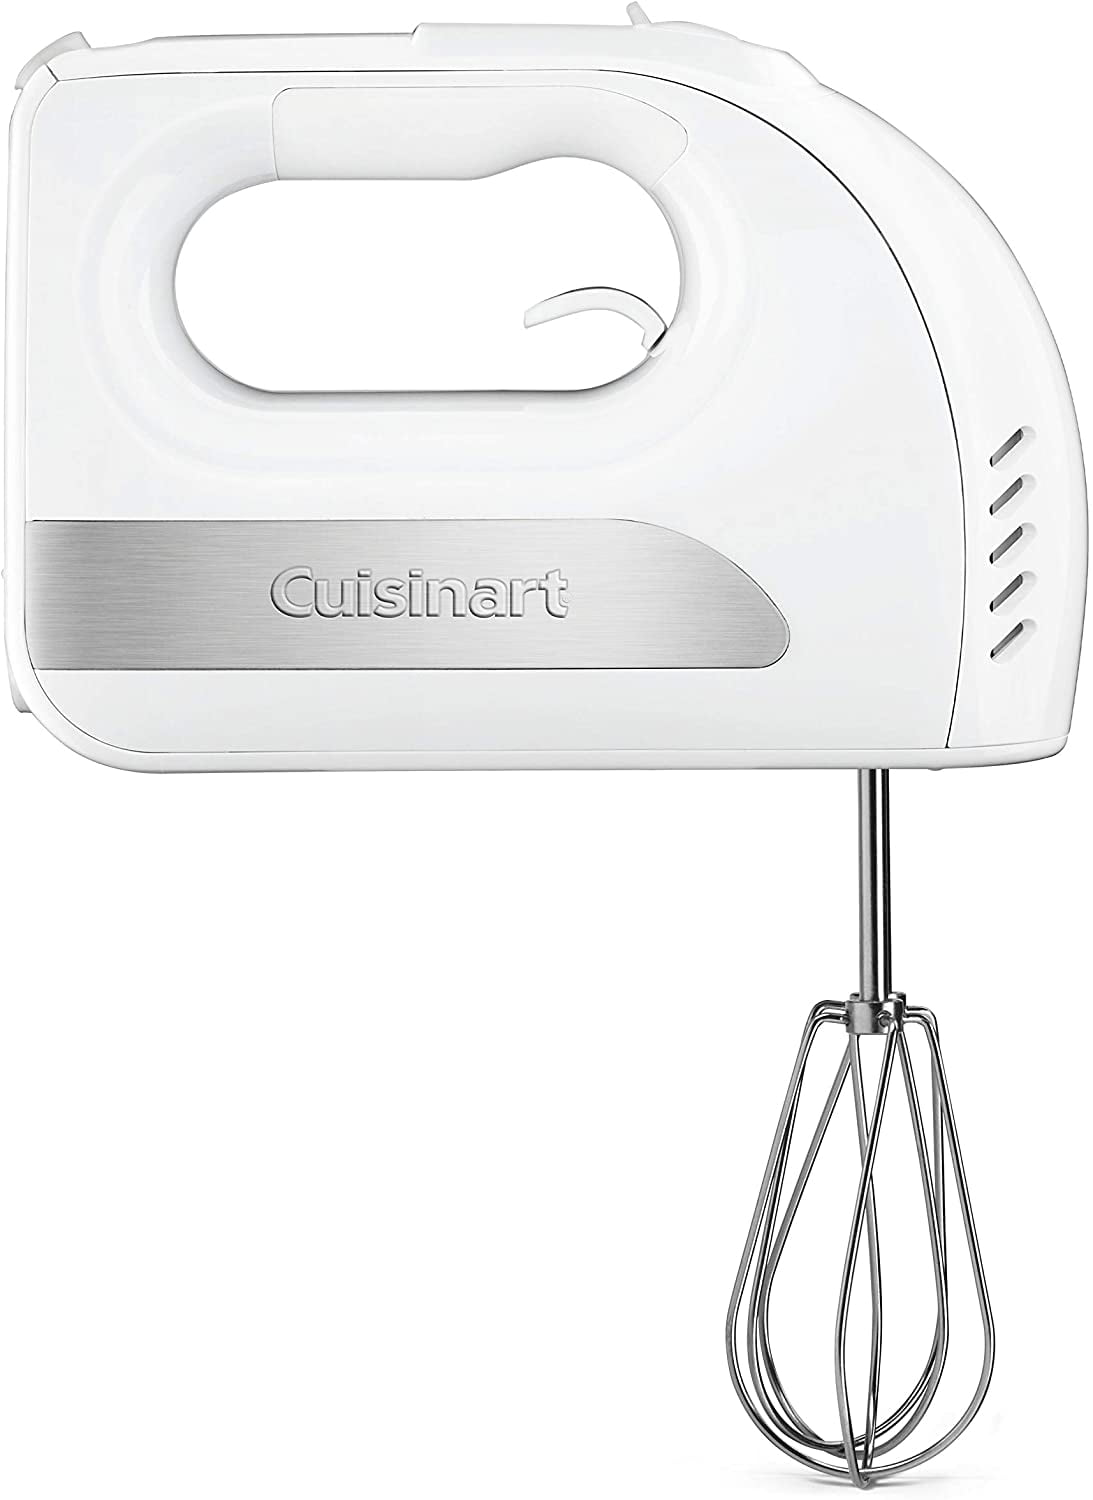 Cuisinart - Power Advantage 6-Speed Hand Mixer (White)